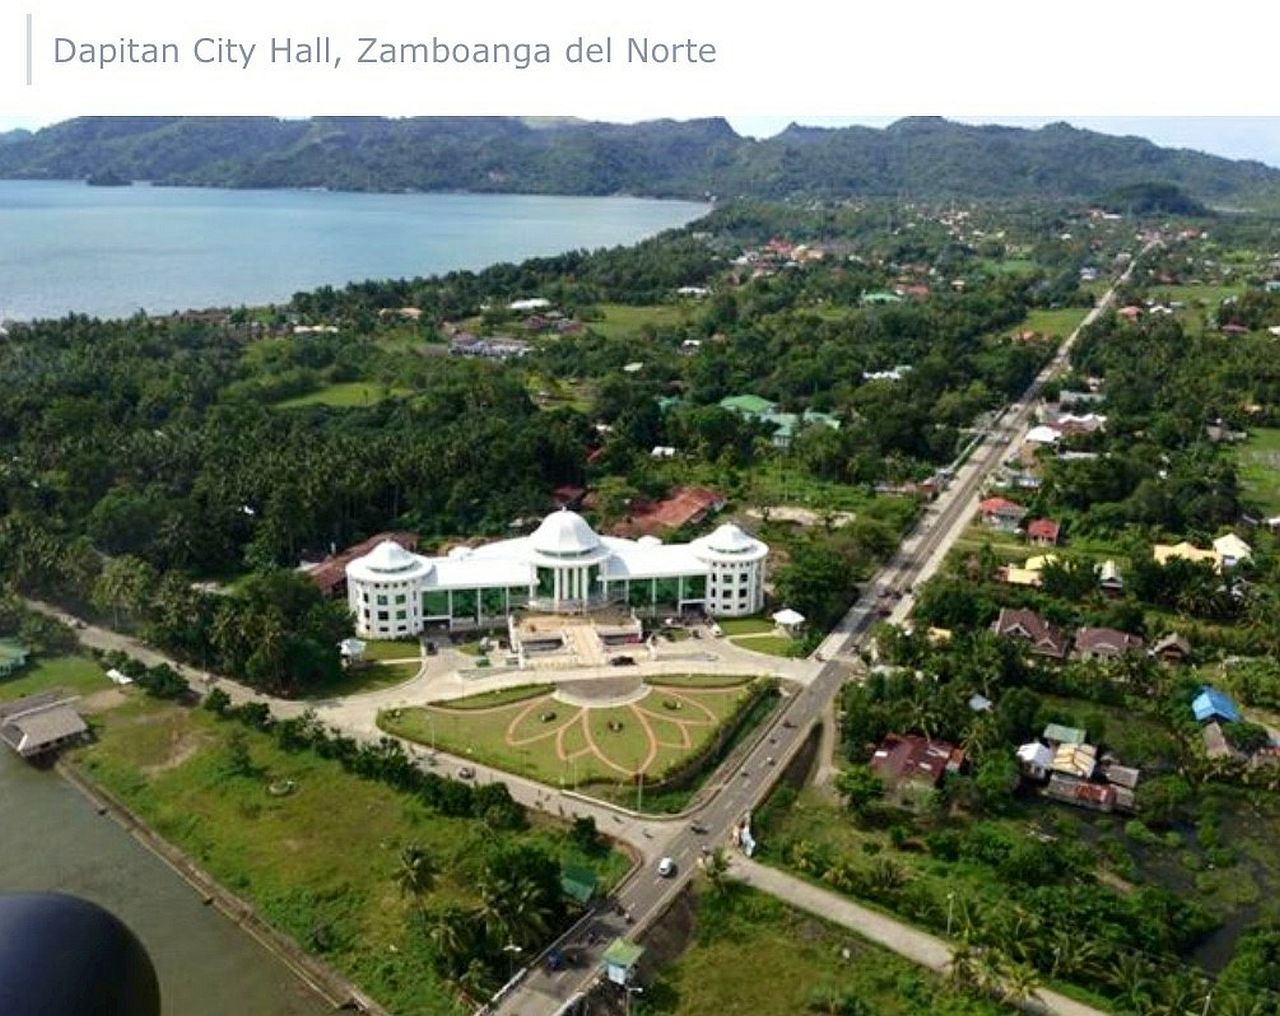 PHILIPPINEN MAGAZIN - DONNERSTAGSTHEMA - SCHÖNE ORTE - Dapitan in Zamboanga del Norte